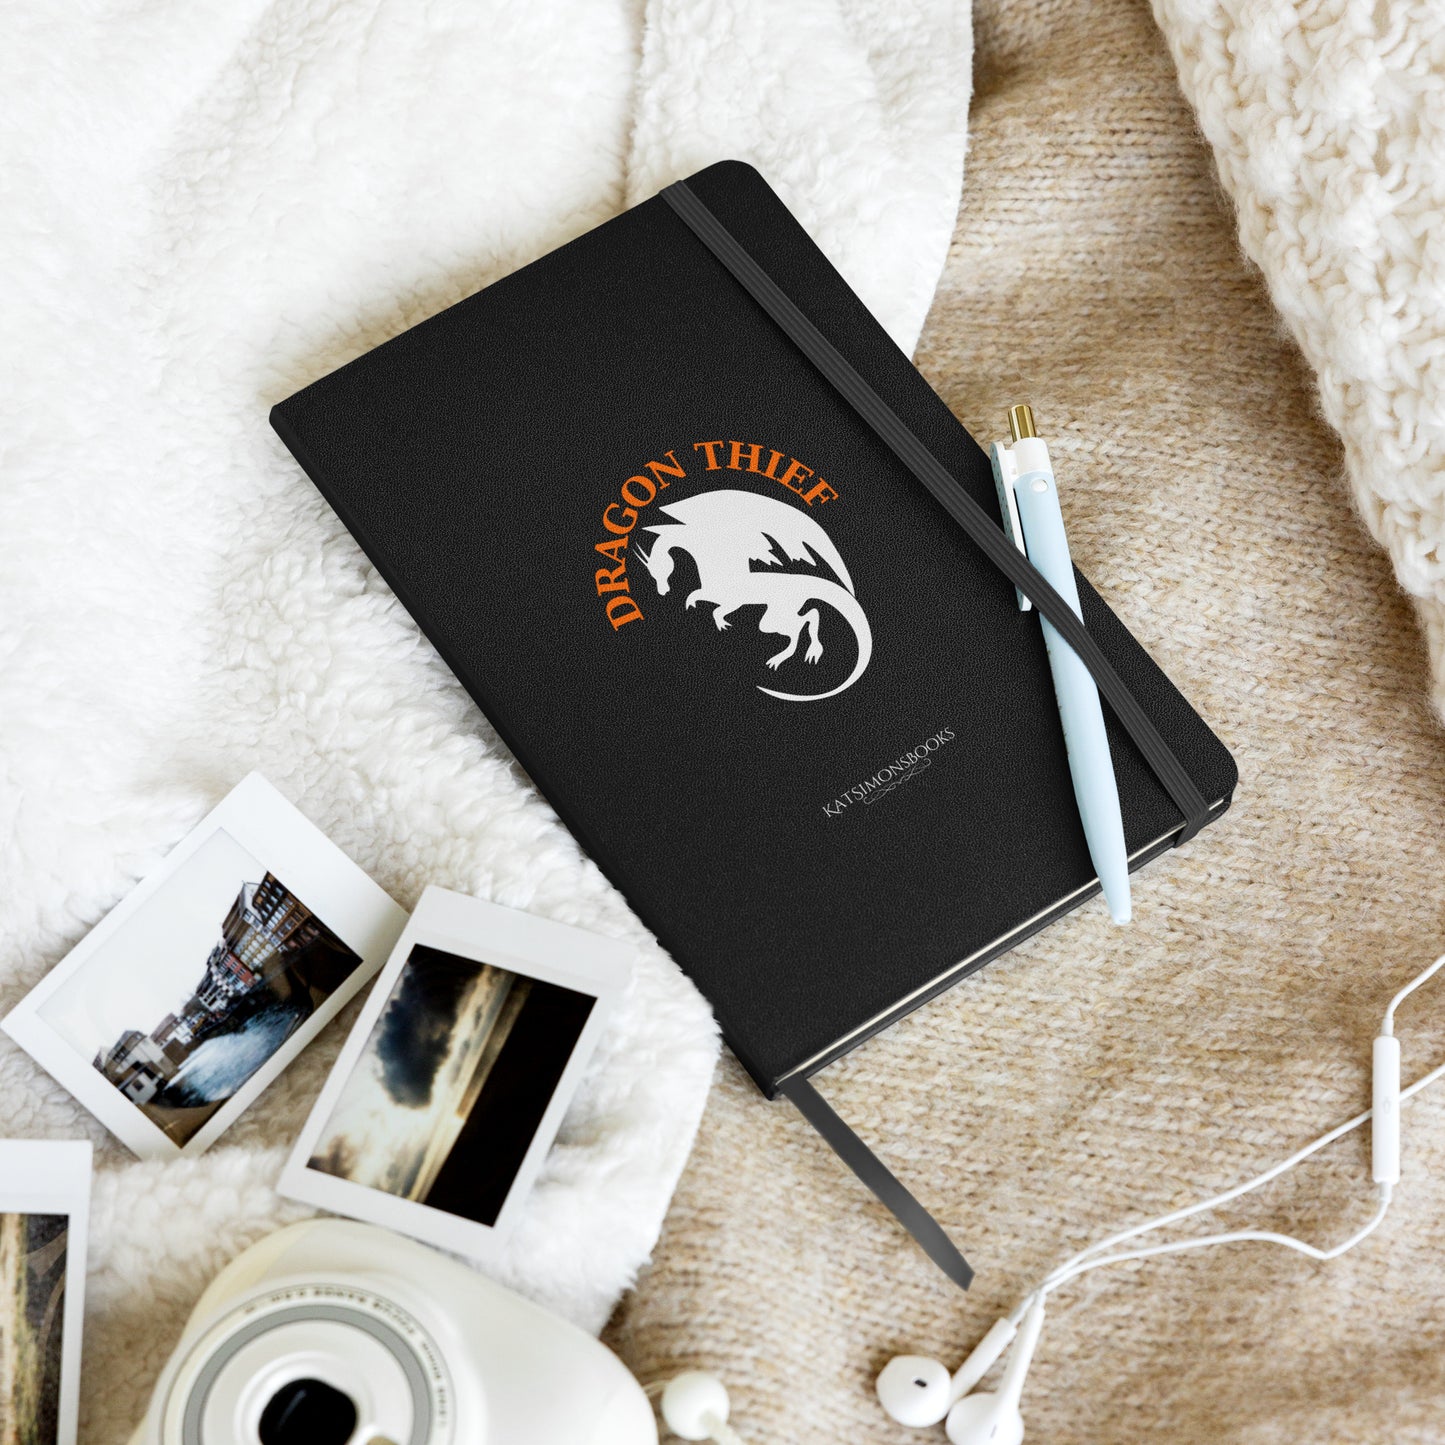 Dragon Thief Hardcover bound notebook